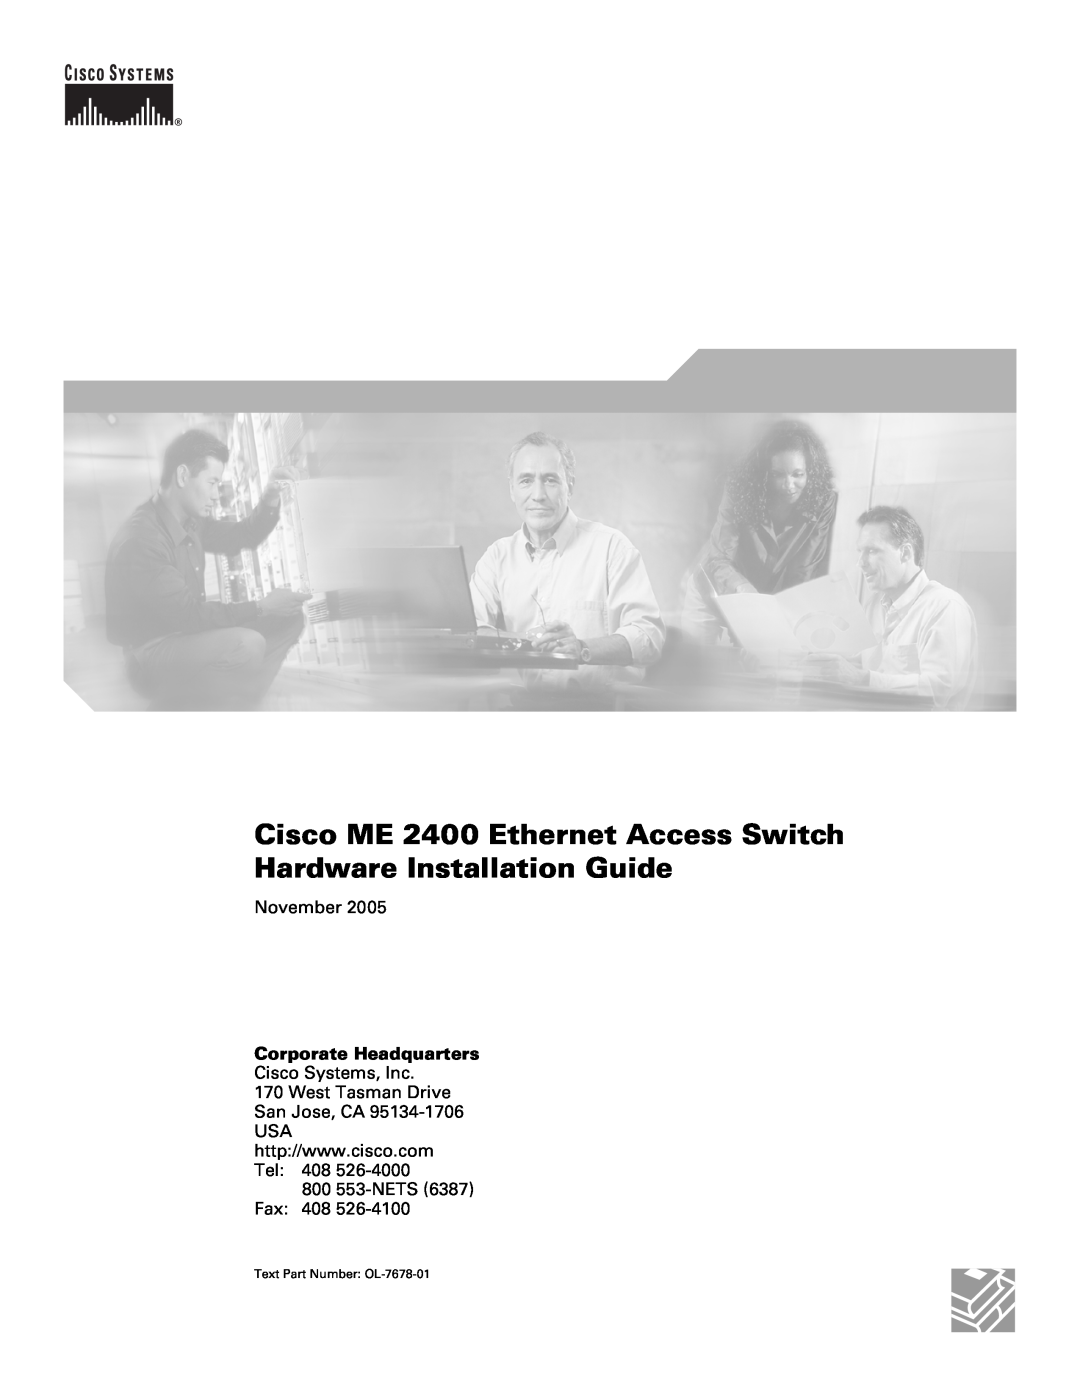 Cisco Systems ME 2400 manual November, Cisco Systems, Inc 170 West Tasman Drive San Jose, CA, 800 553-NETS Fax 408 